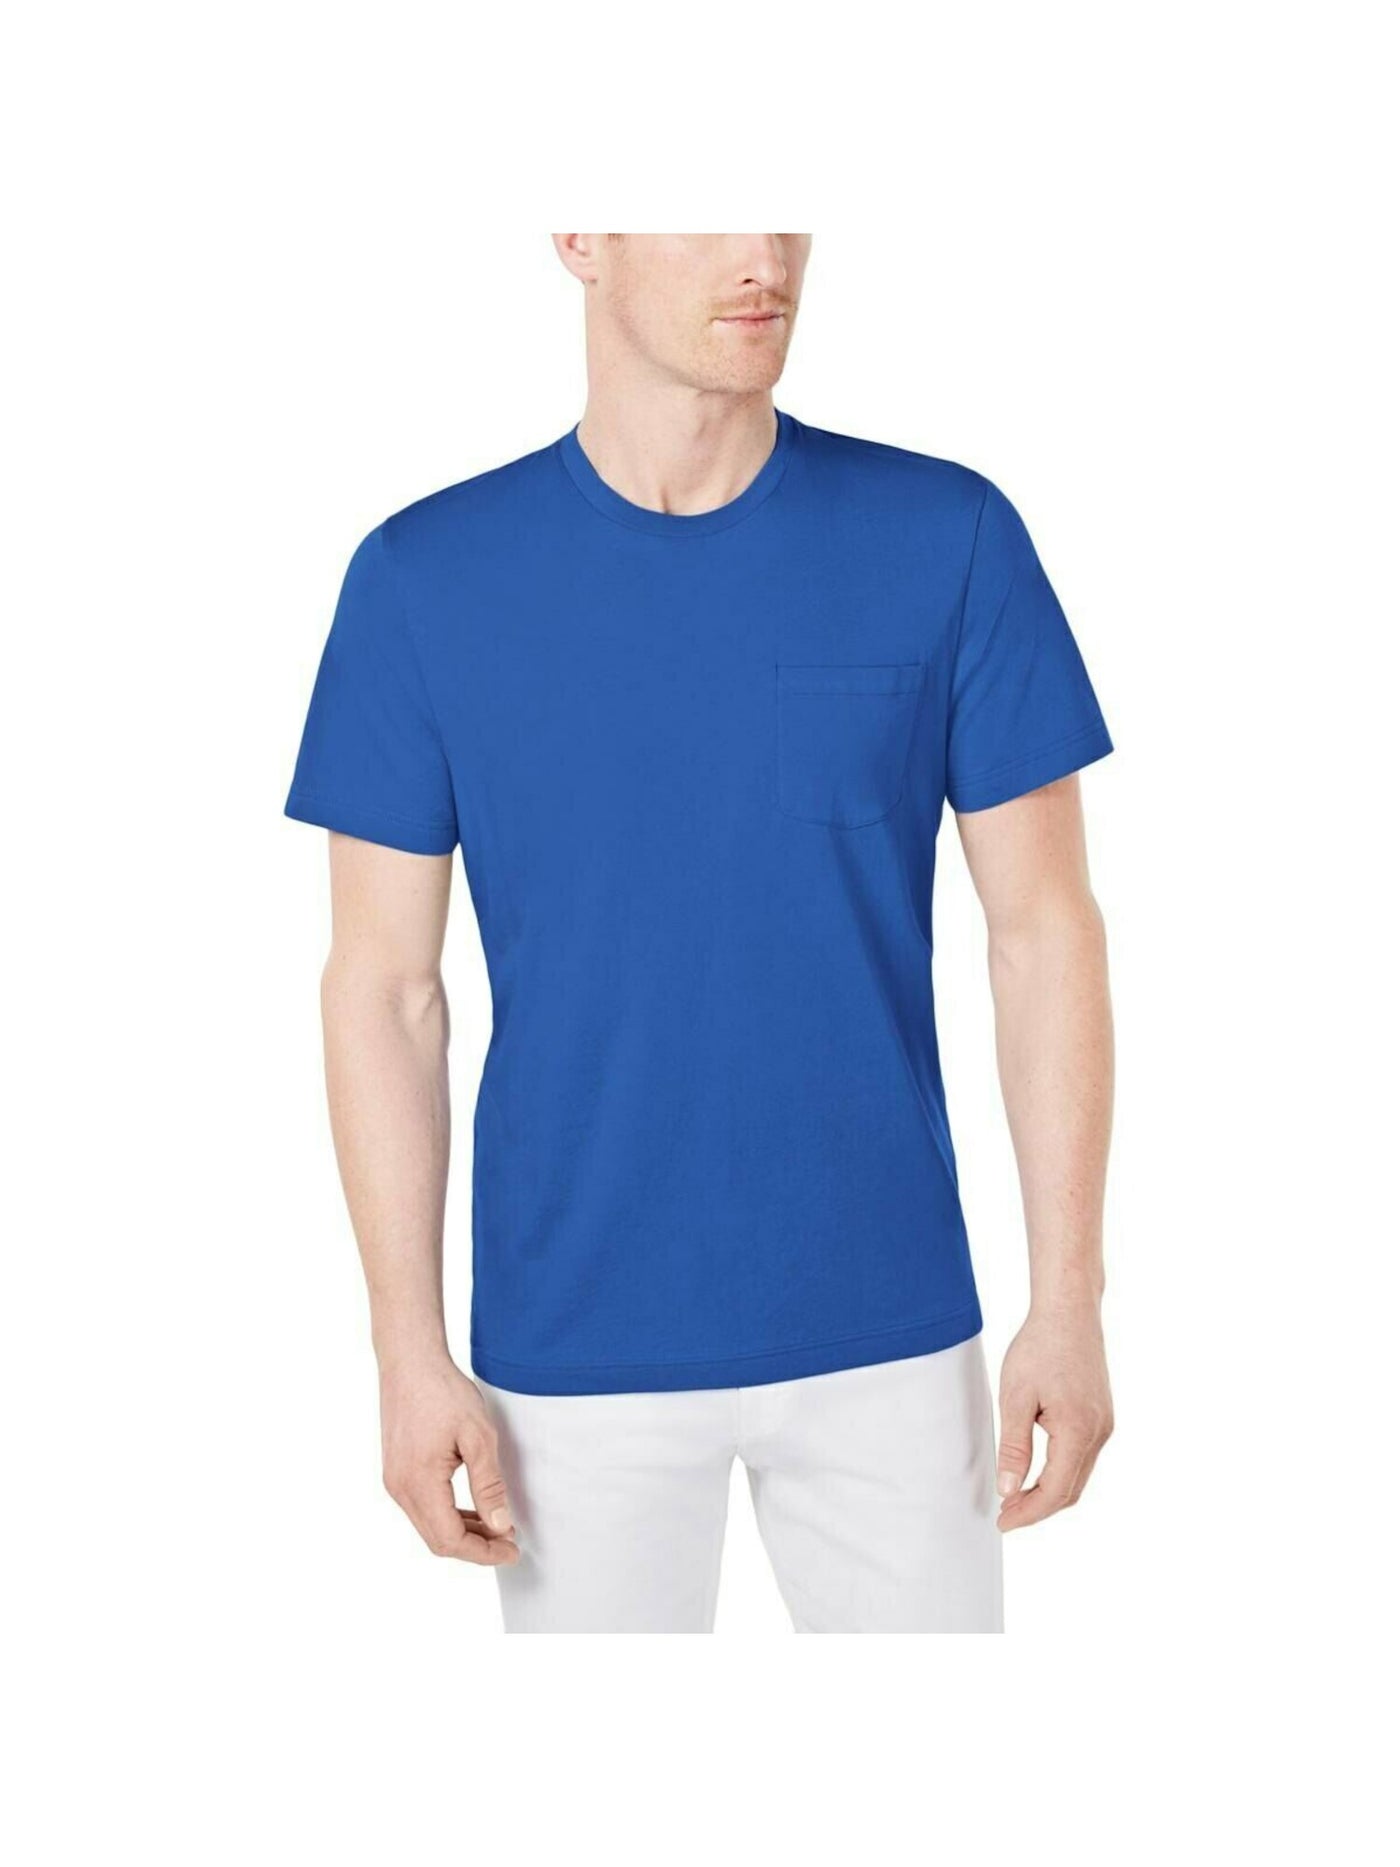 CLUBROOM Mens Blue Short Sleeve Classic Fit T-Shirt XL